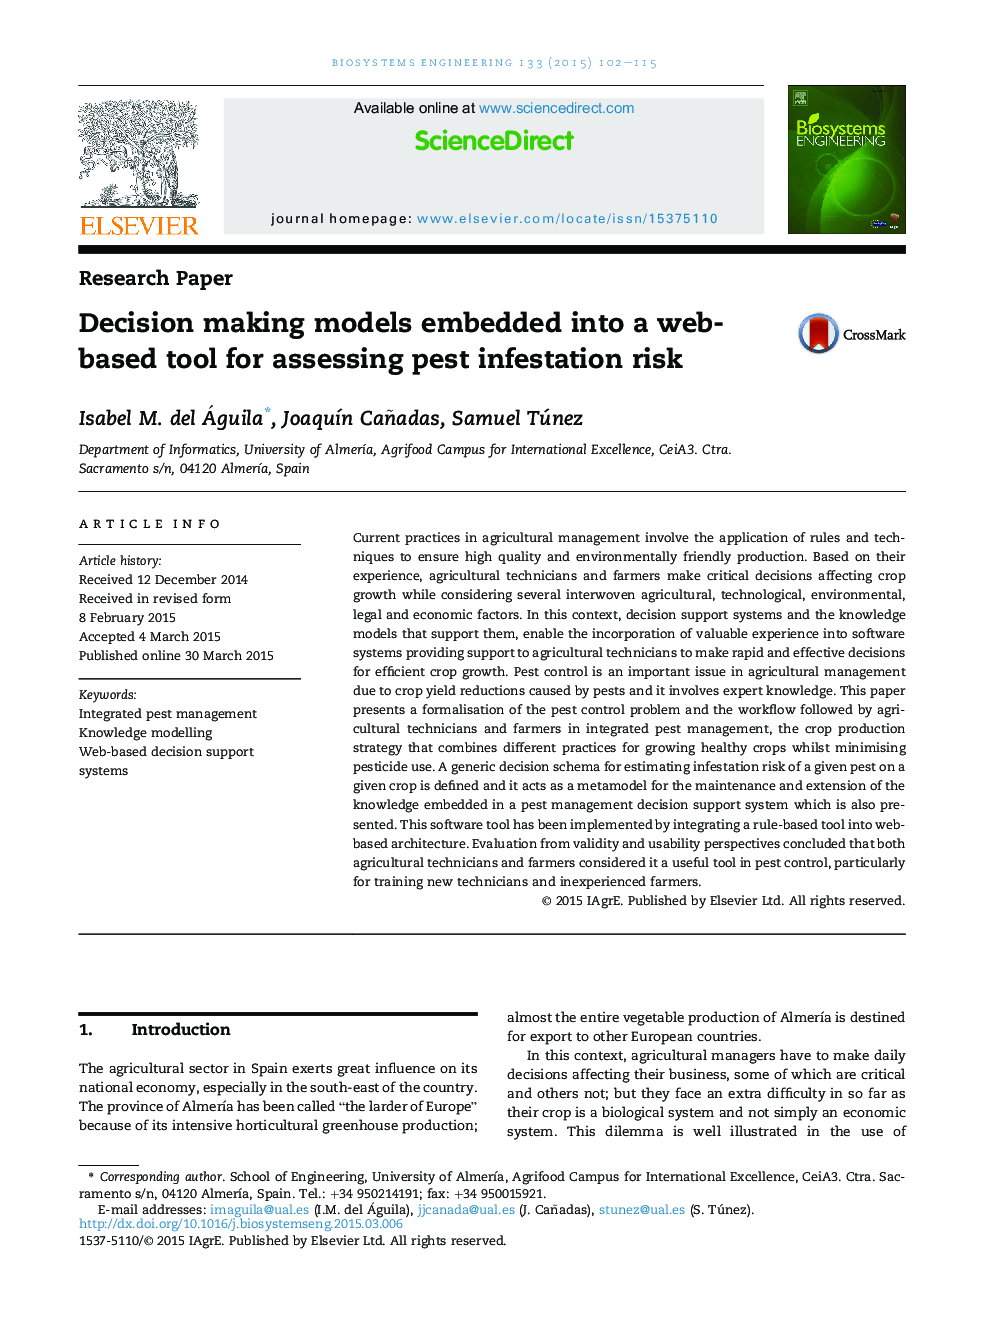 Decision making models embedded into a web-based tool for assessing pest infestation risk